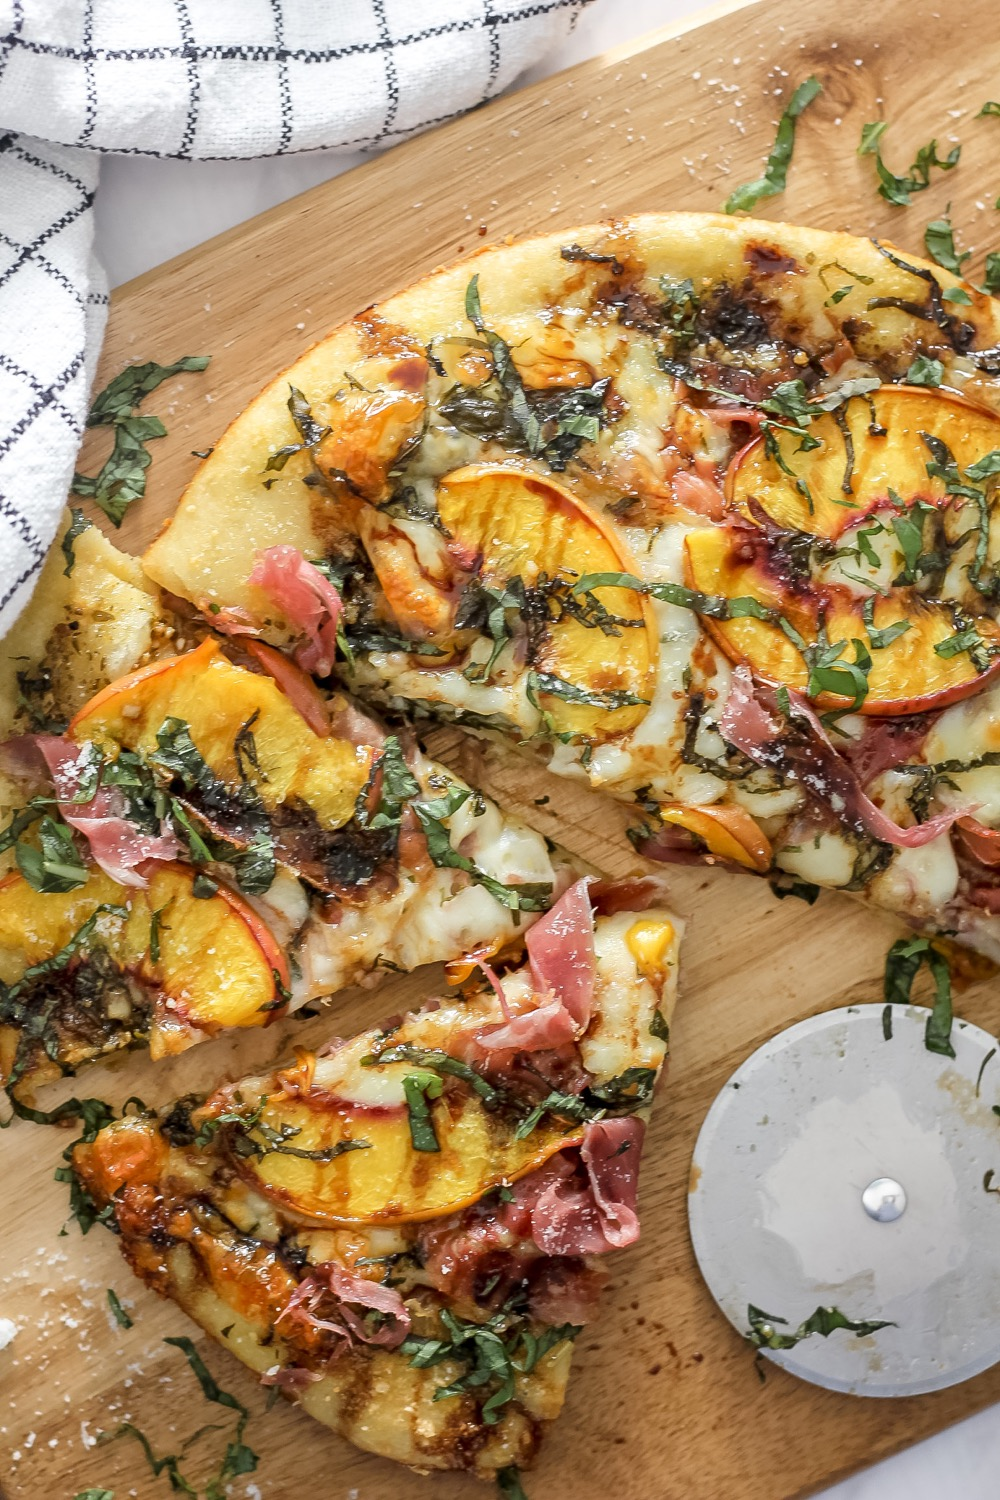 Summer Peach and Prosciutto Pizza with Balsamic Glaze Drizzle HD Wallpaper